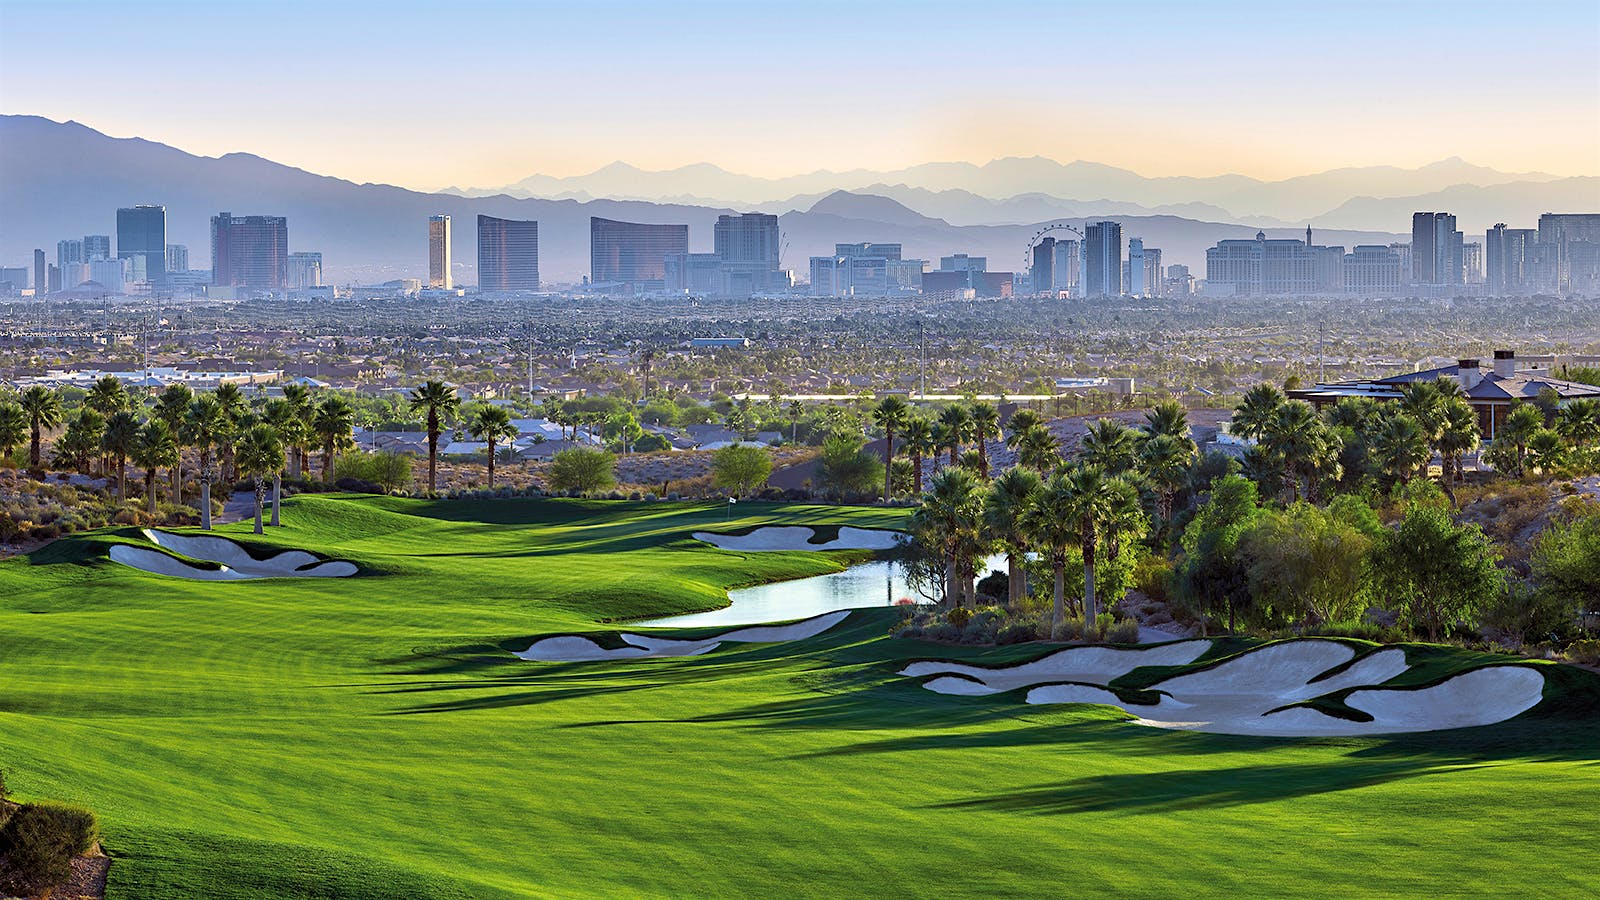 Las Vegas Golf: Las Vegas golf courses, ratings and reviews